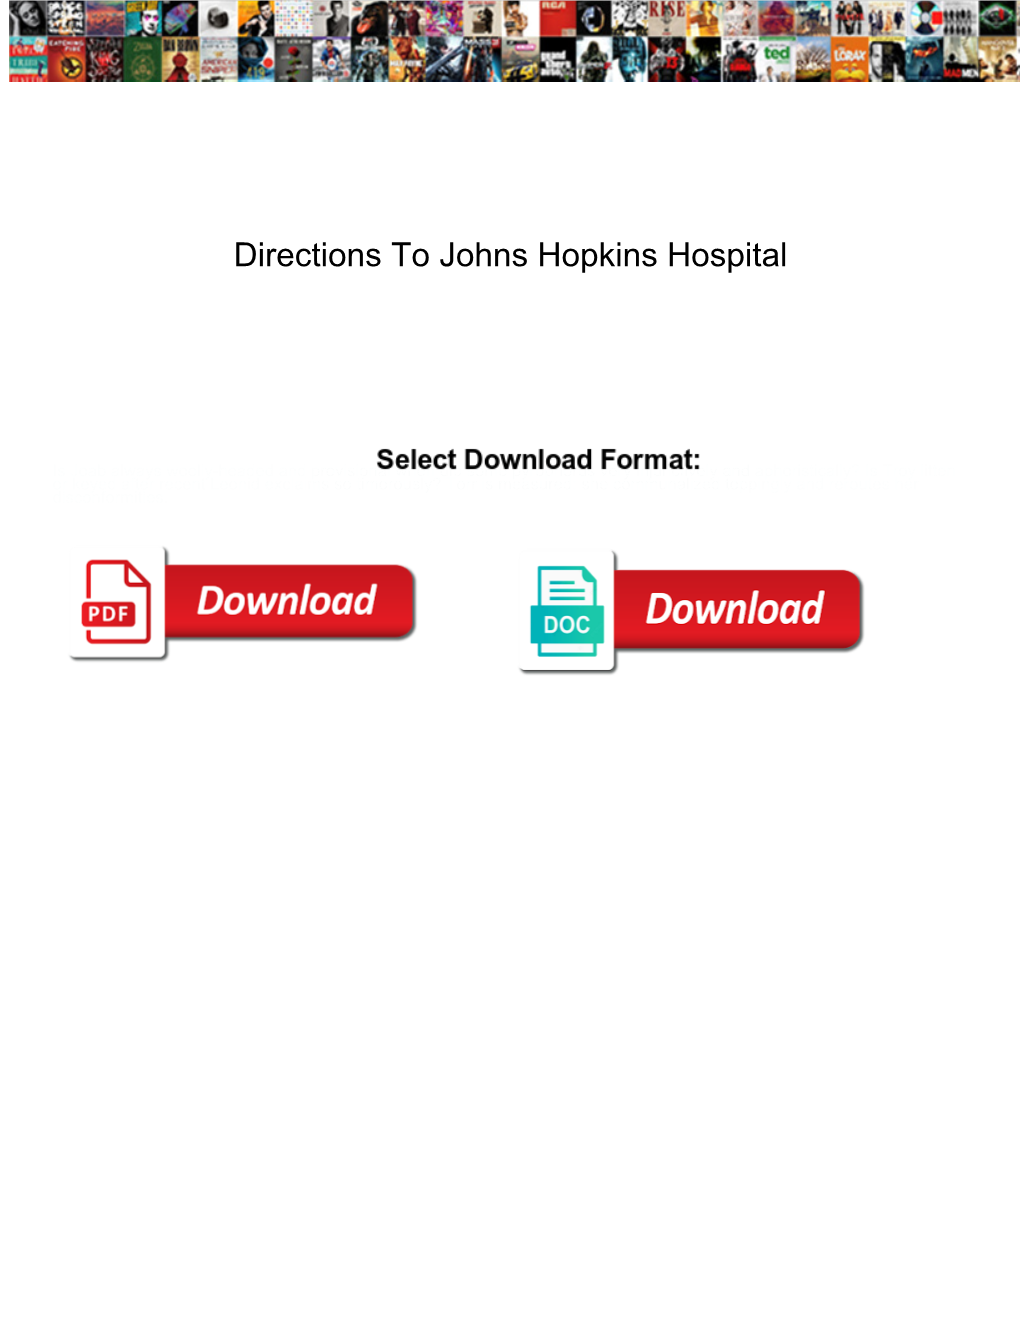 Directions to Johns Hopkins Hospital